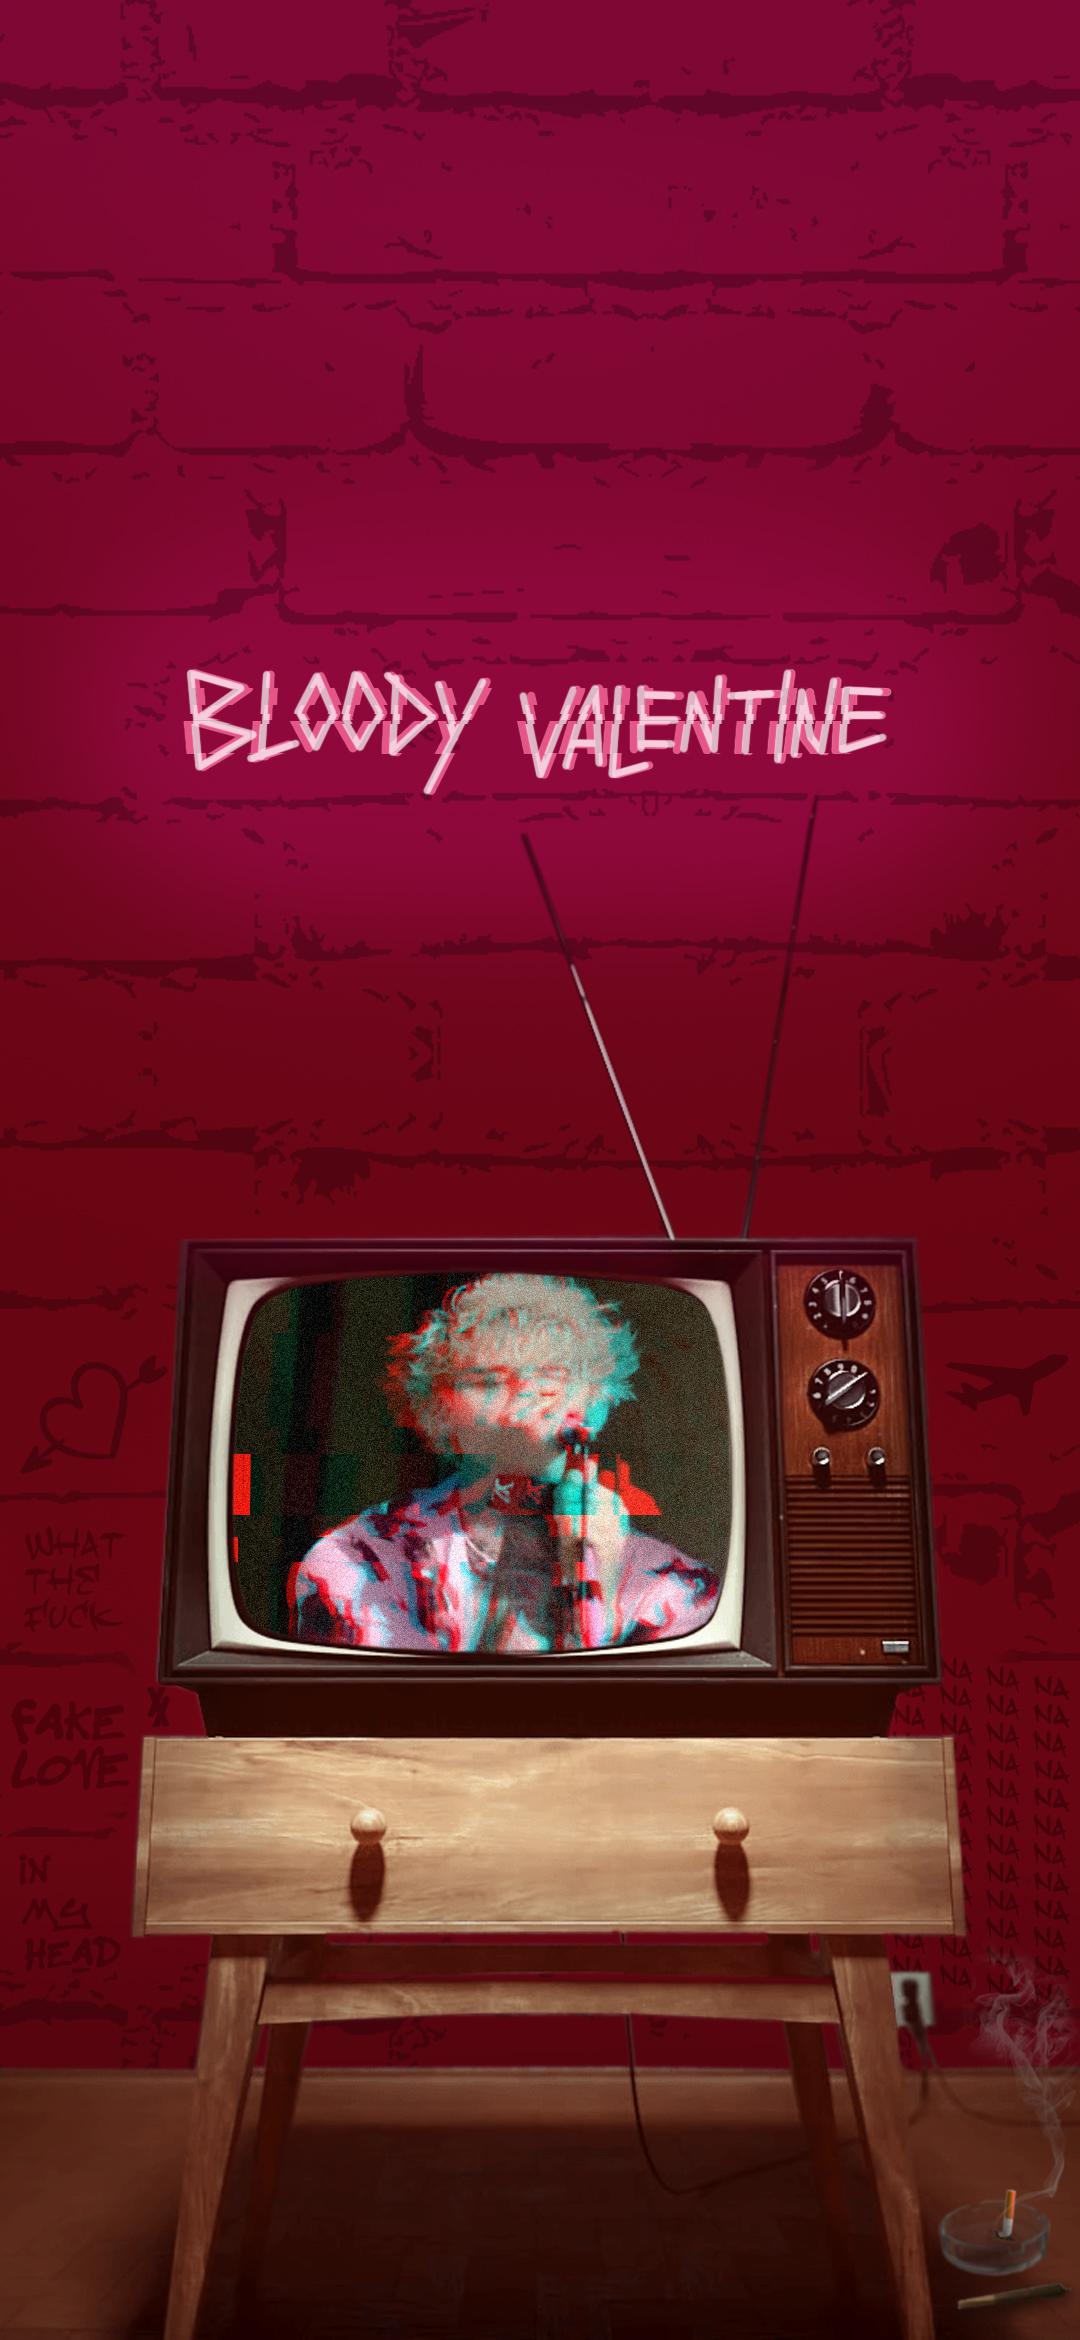 New Bloody Valentine phone wallpaper edit